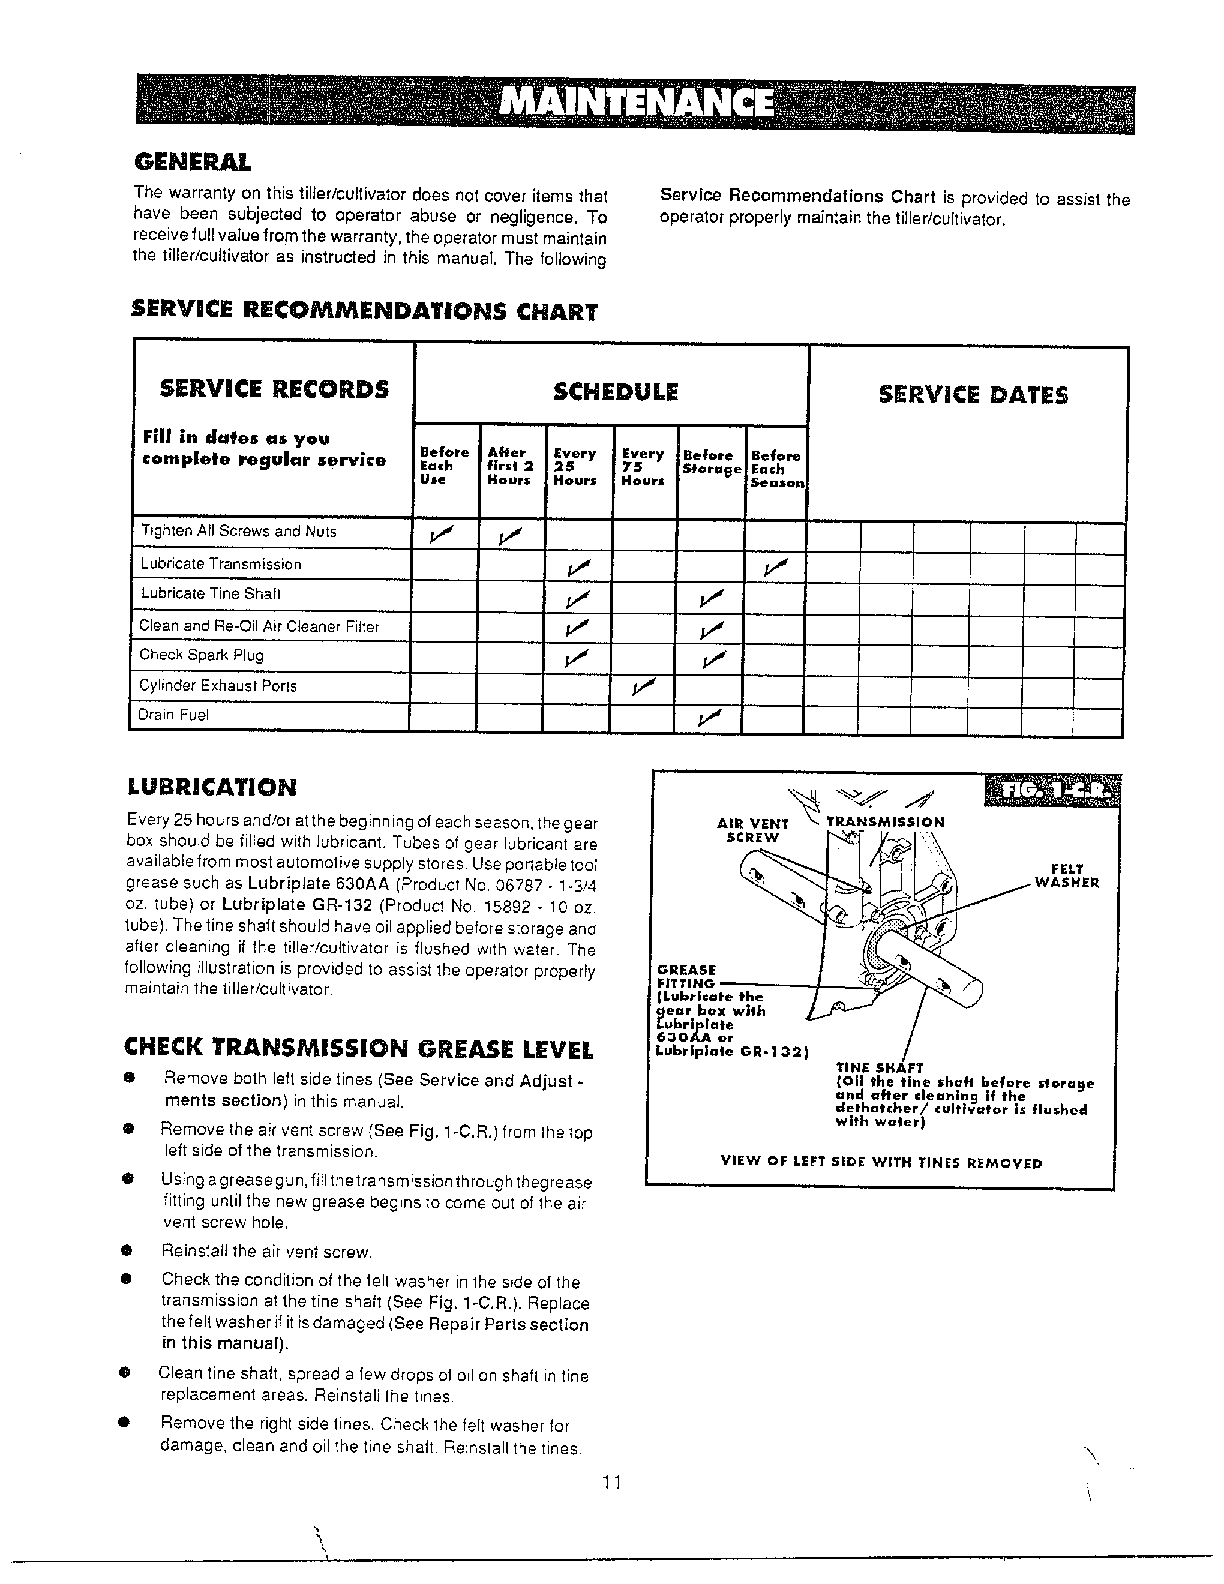 Noma portable air conditioner manual pdf